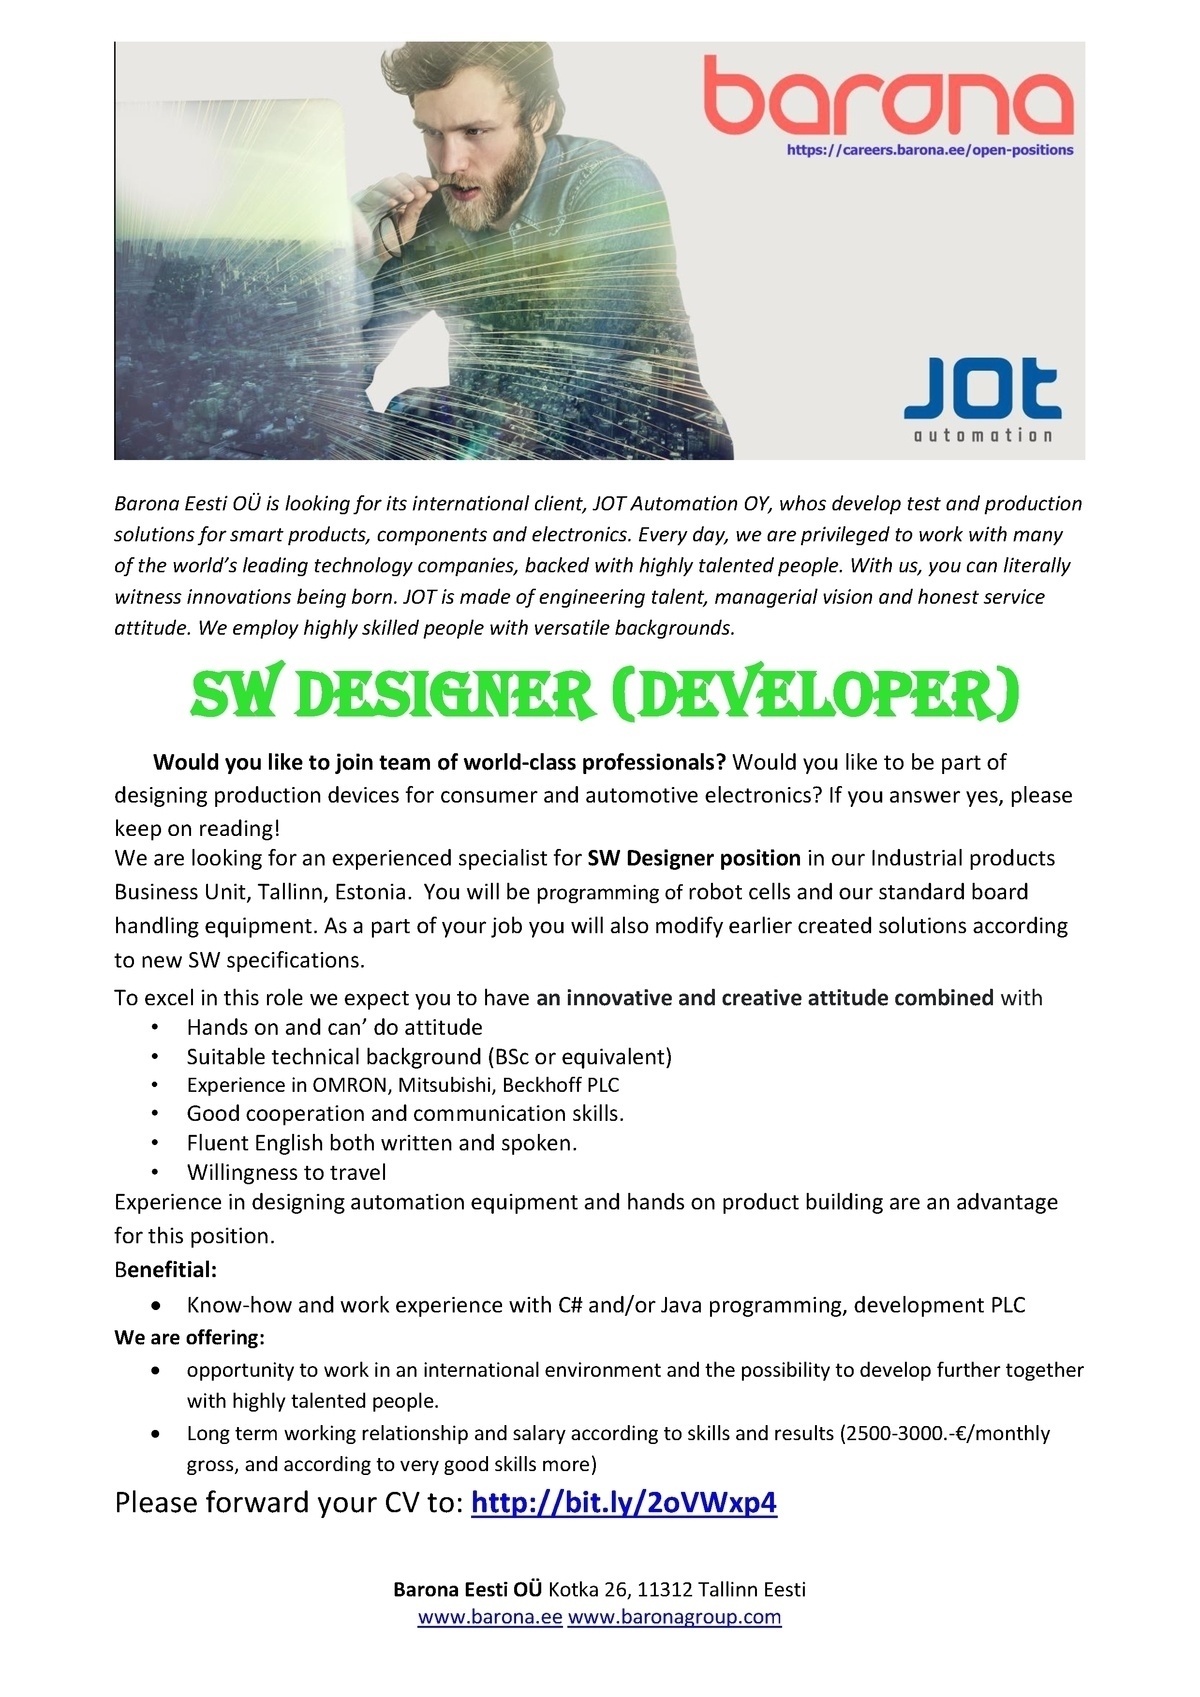 Barona Eesti OÜ Software Designer (PLC developer) position in Industrial products